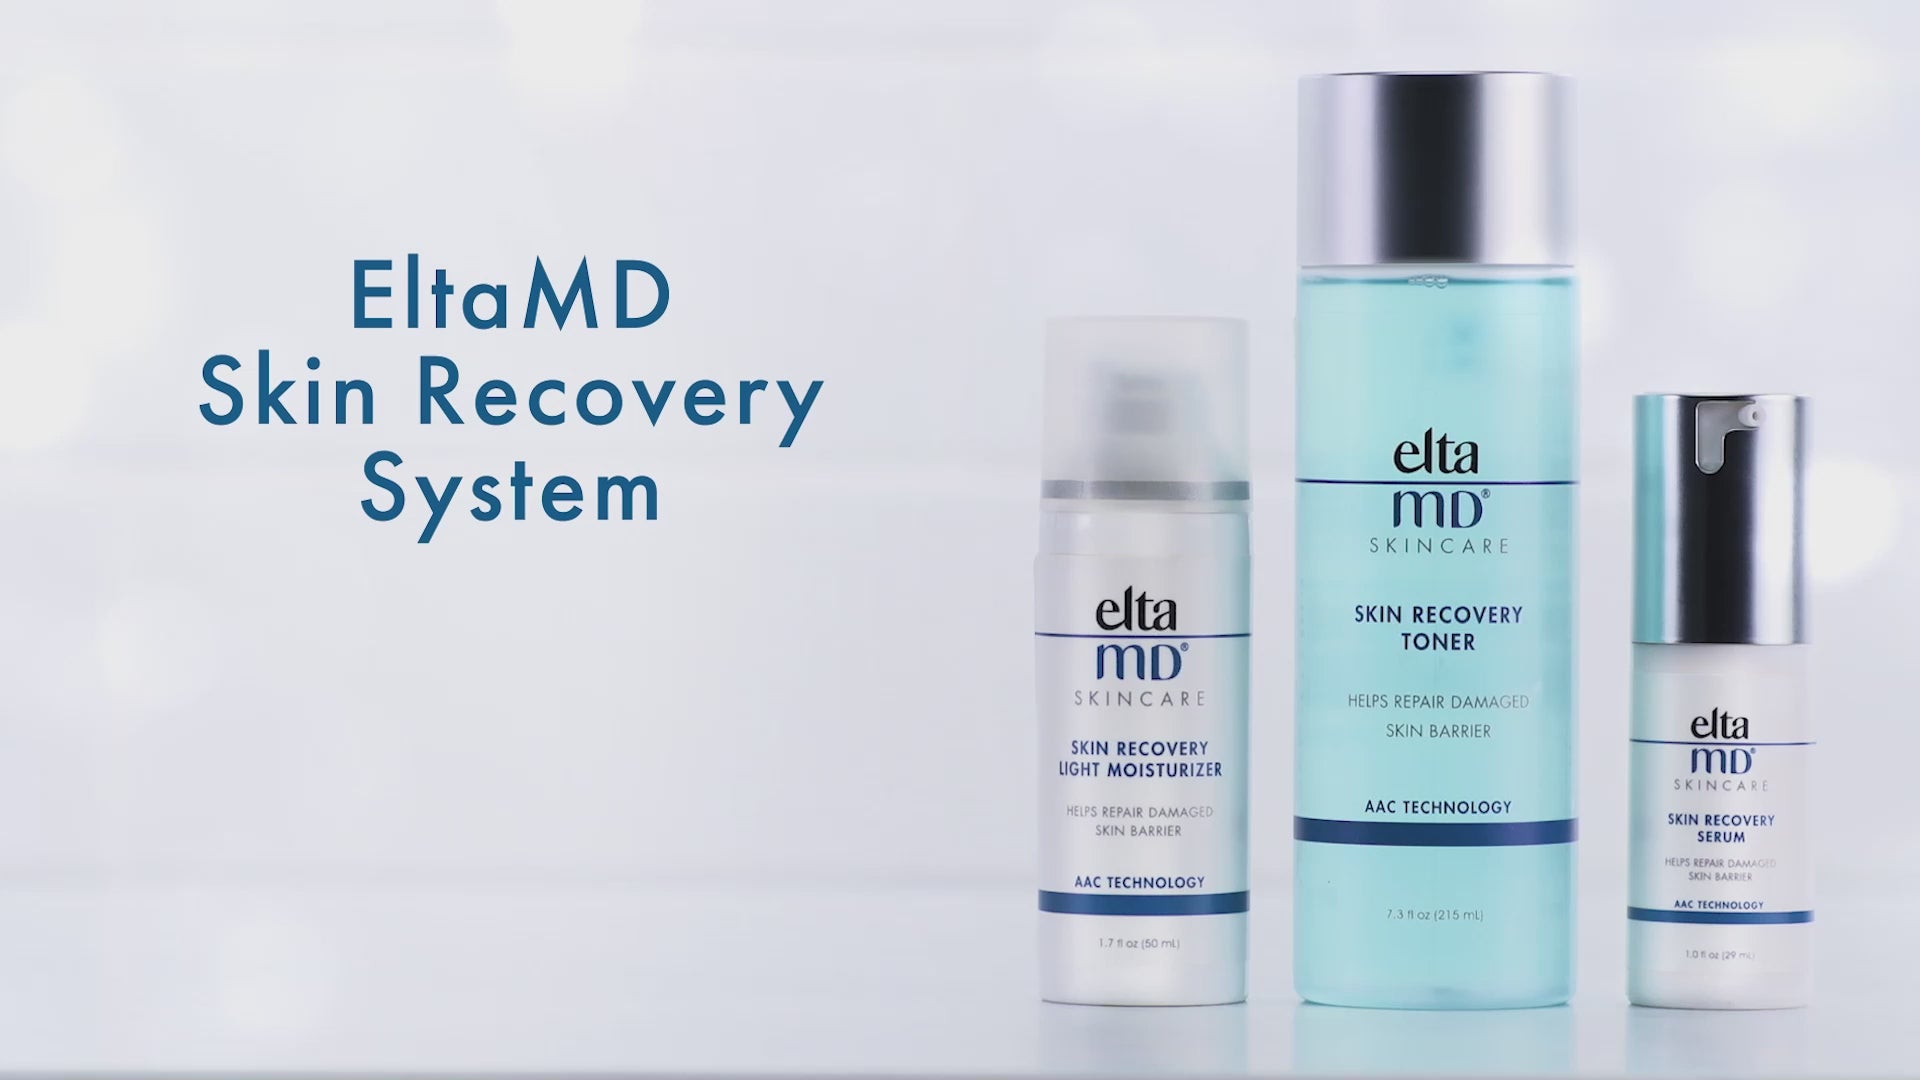 EltaMD Skin Recovery Light Moisturizer (1.7 oz)